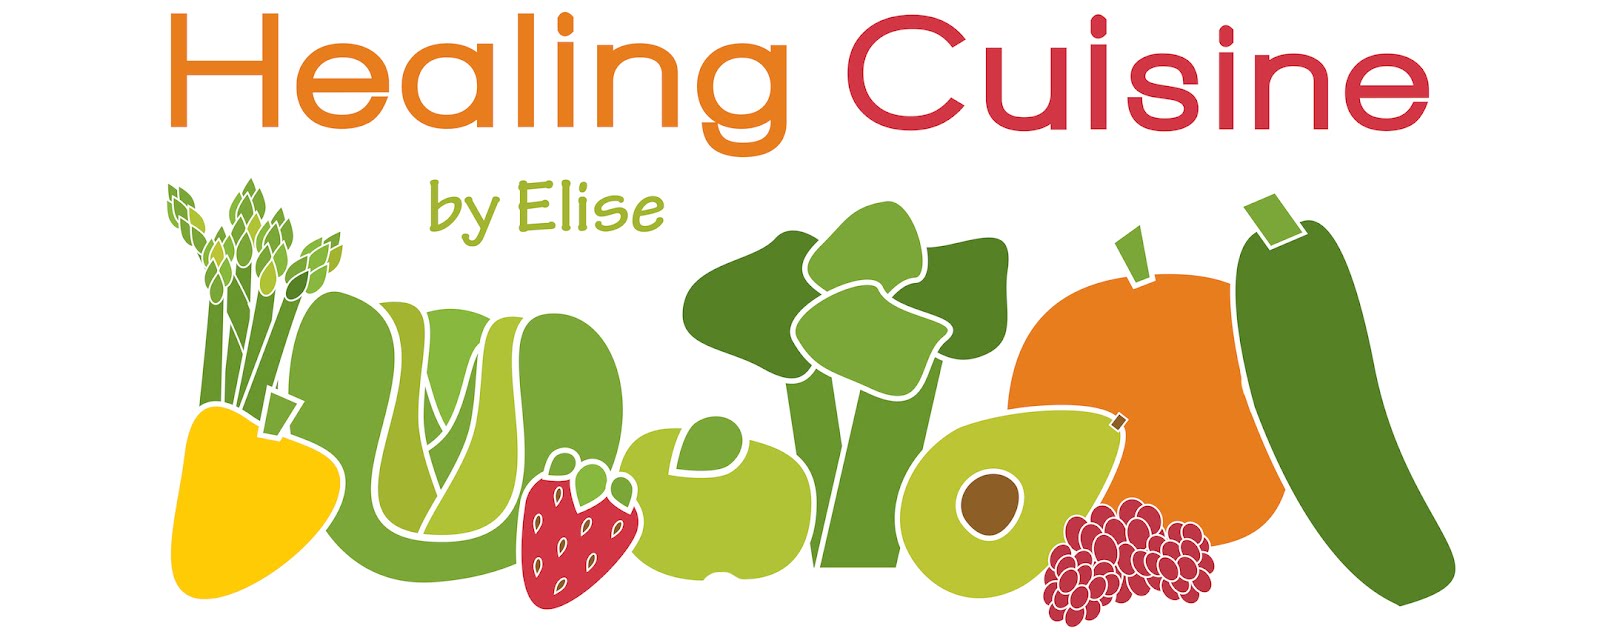 healing cuisine logo